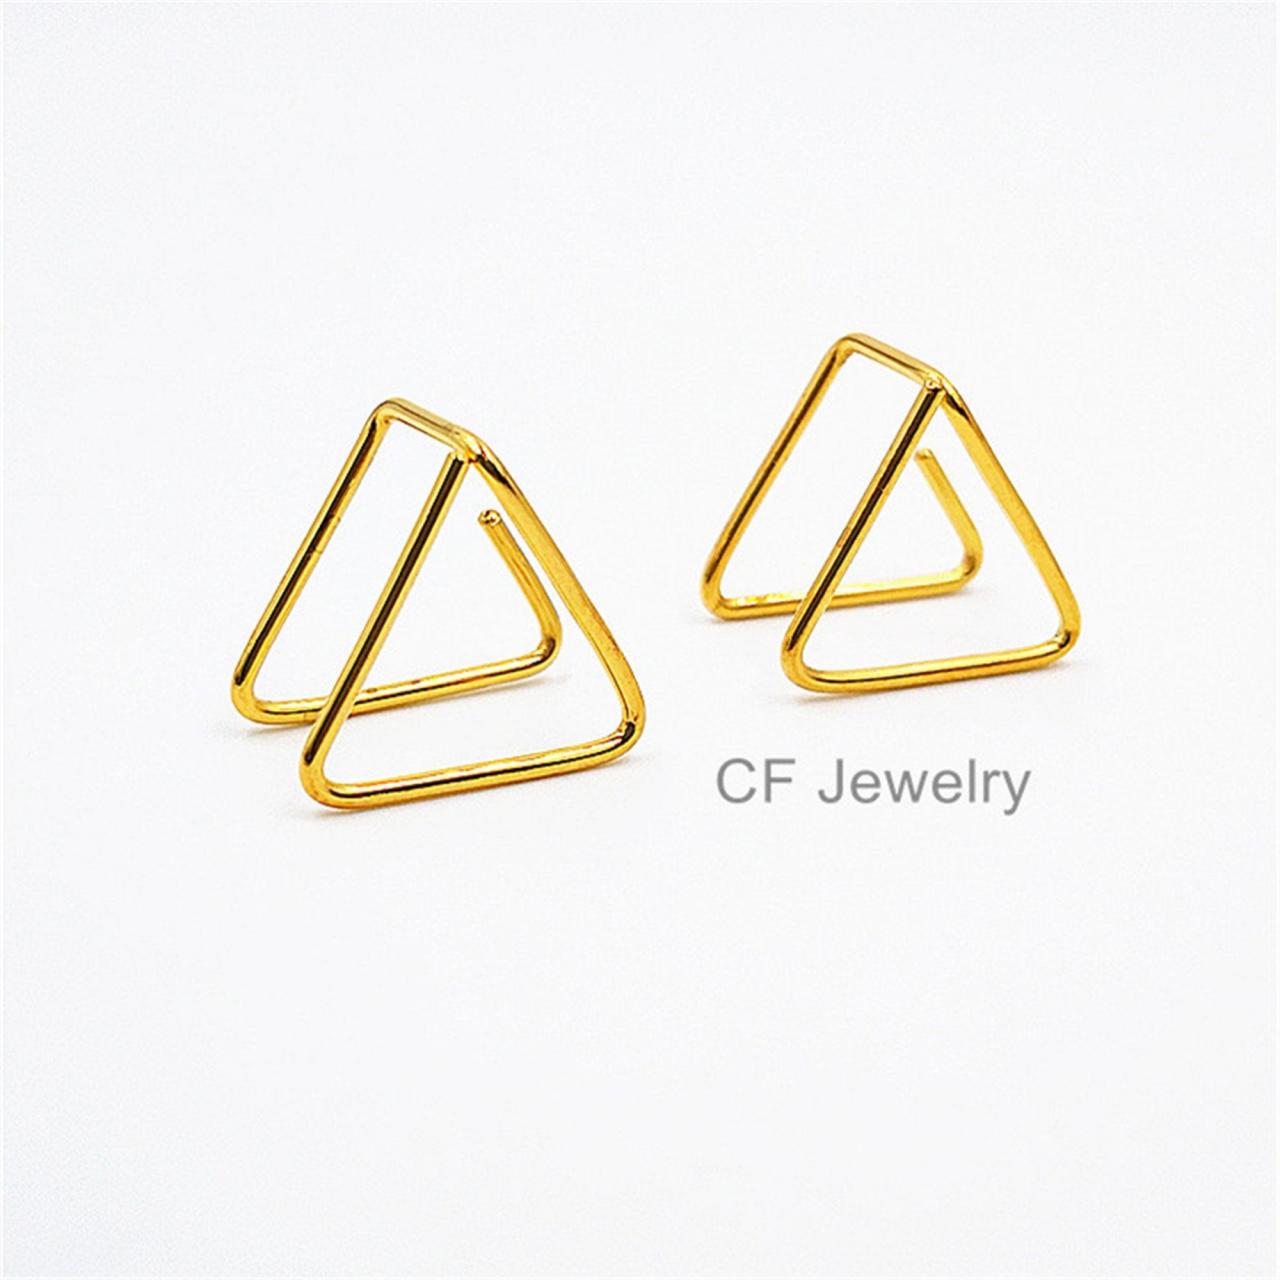 Gold Triangle Earrings Silver Triangle Hoop Earrings Rose Gold Geometric Triangle Earrings Sterling Silver Triangle Dangle Earrings